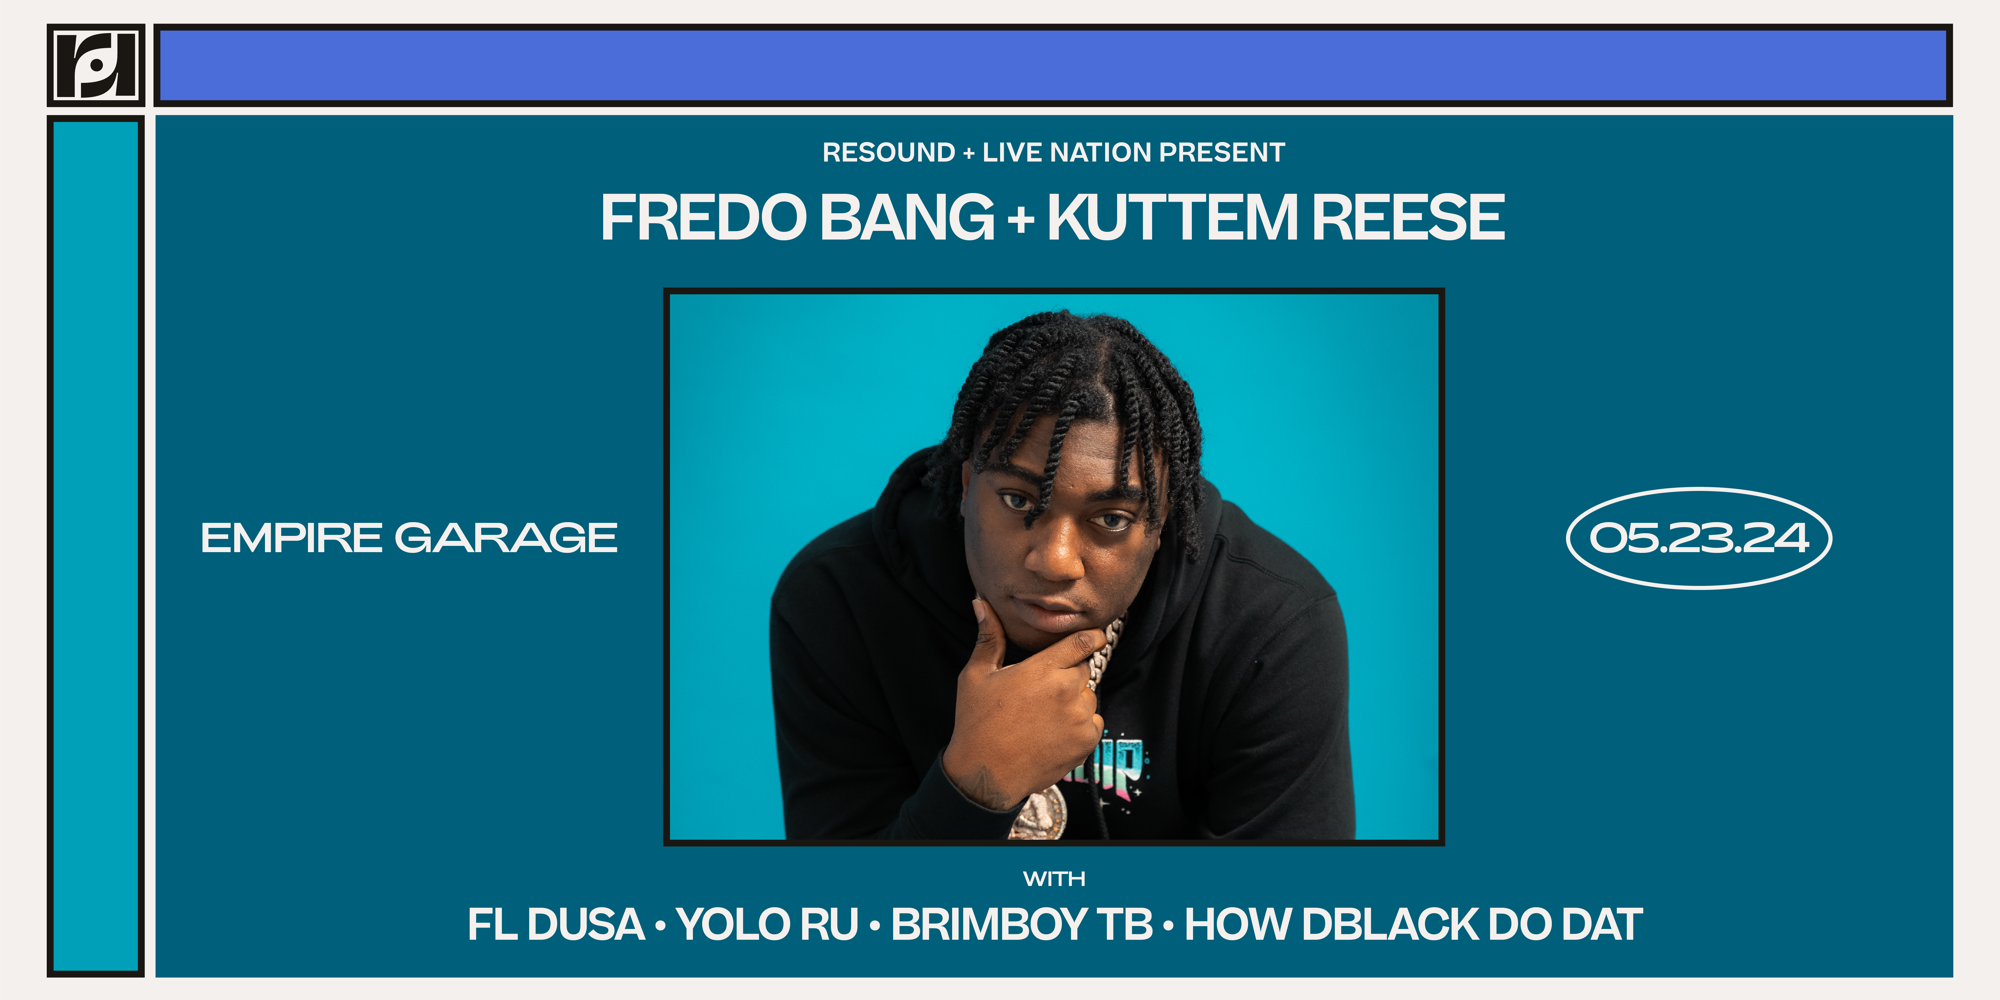 Live Nation + Resound Present: Fredo Bang + Kuttem Reese w/ FL Dusa, Yolo Ru, Brimboy TB, & How DBlack Do Dat at Empire Garage promotional image